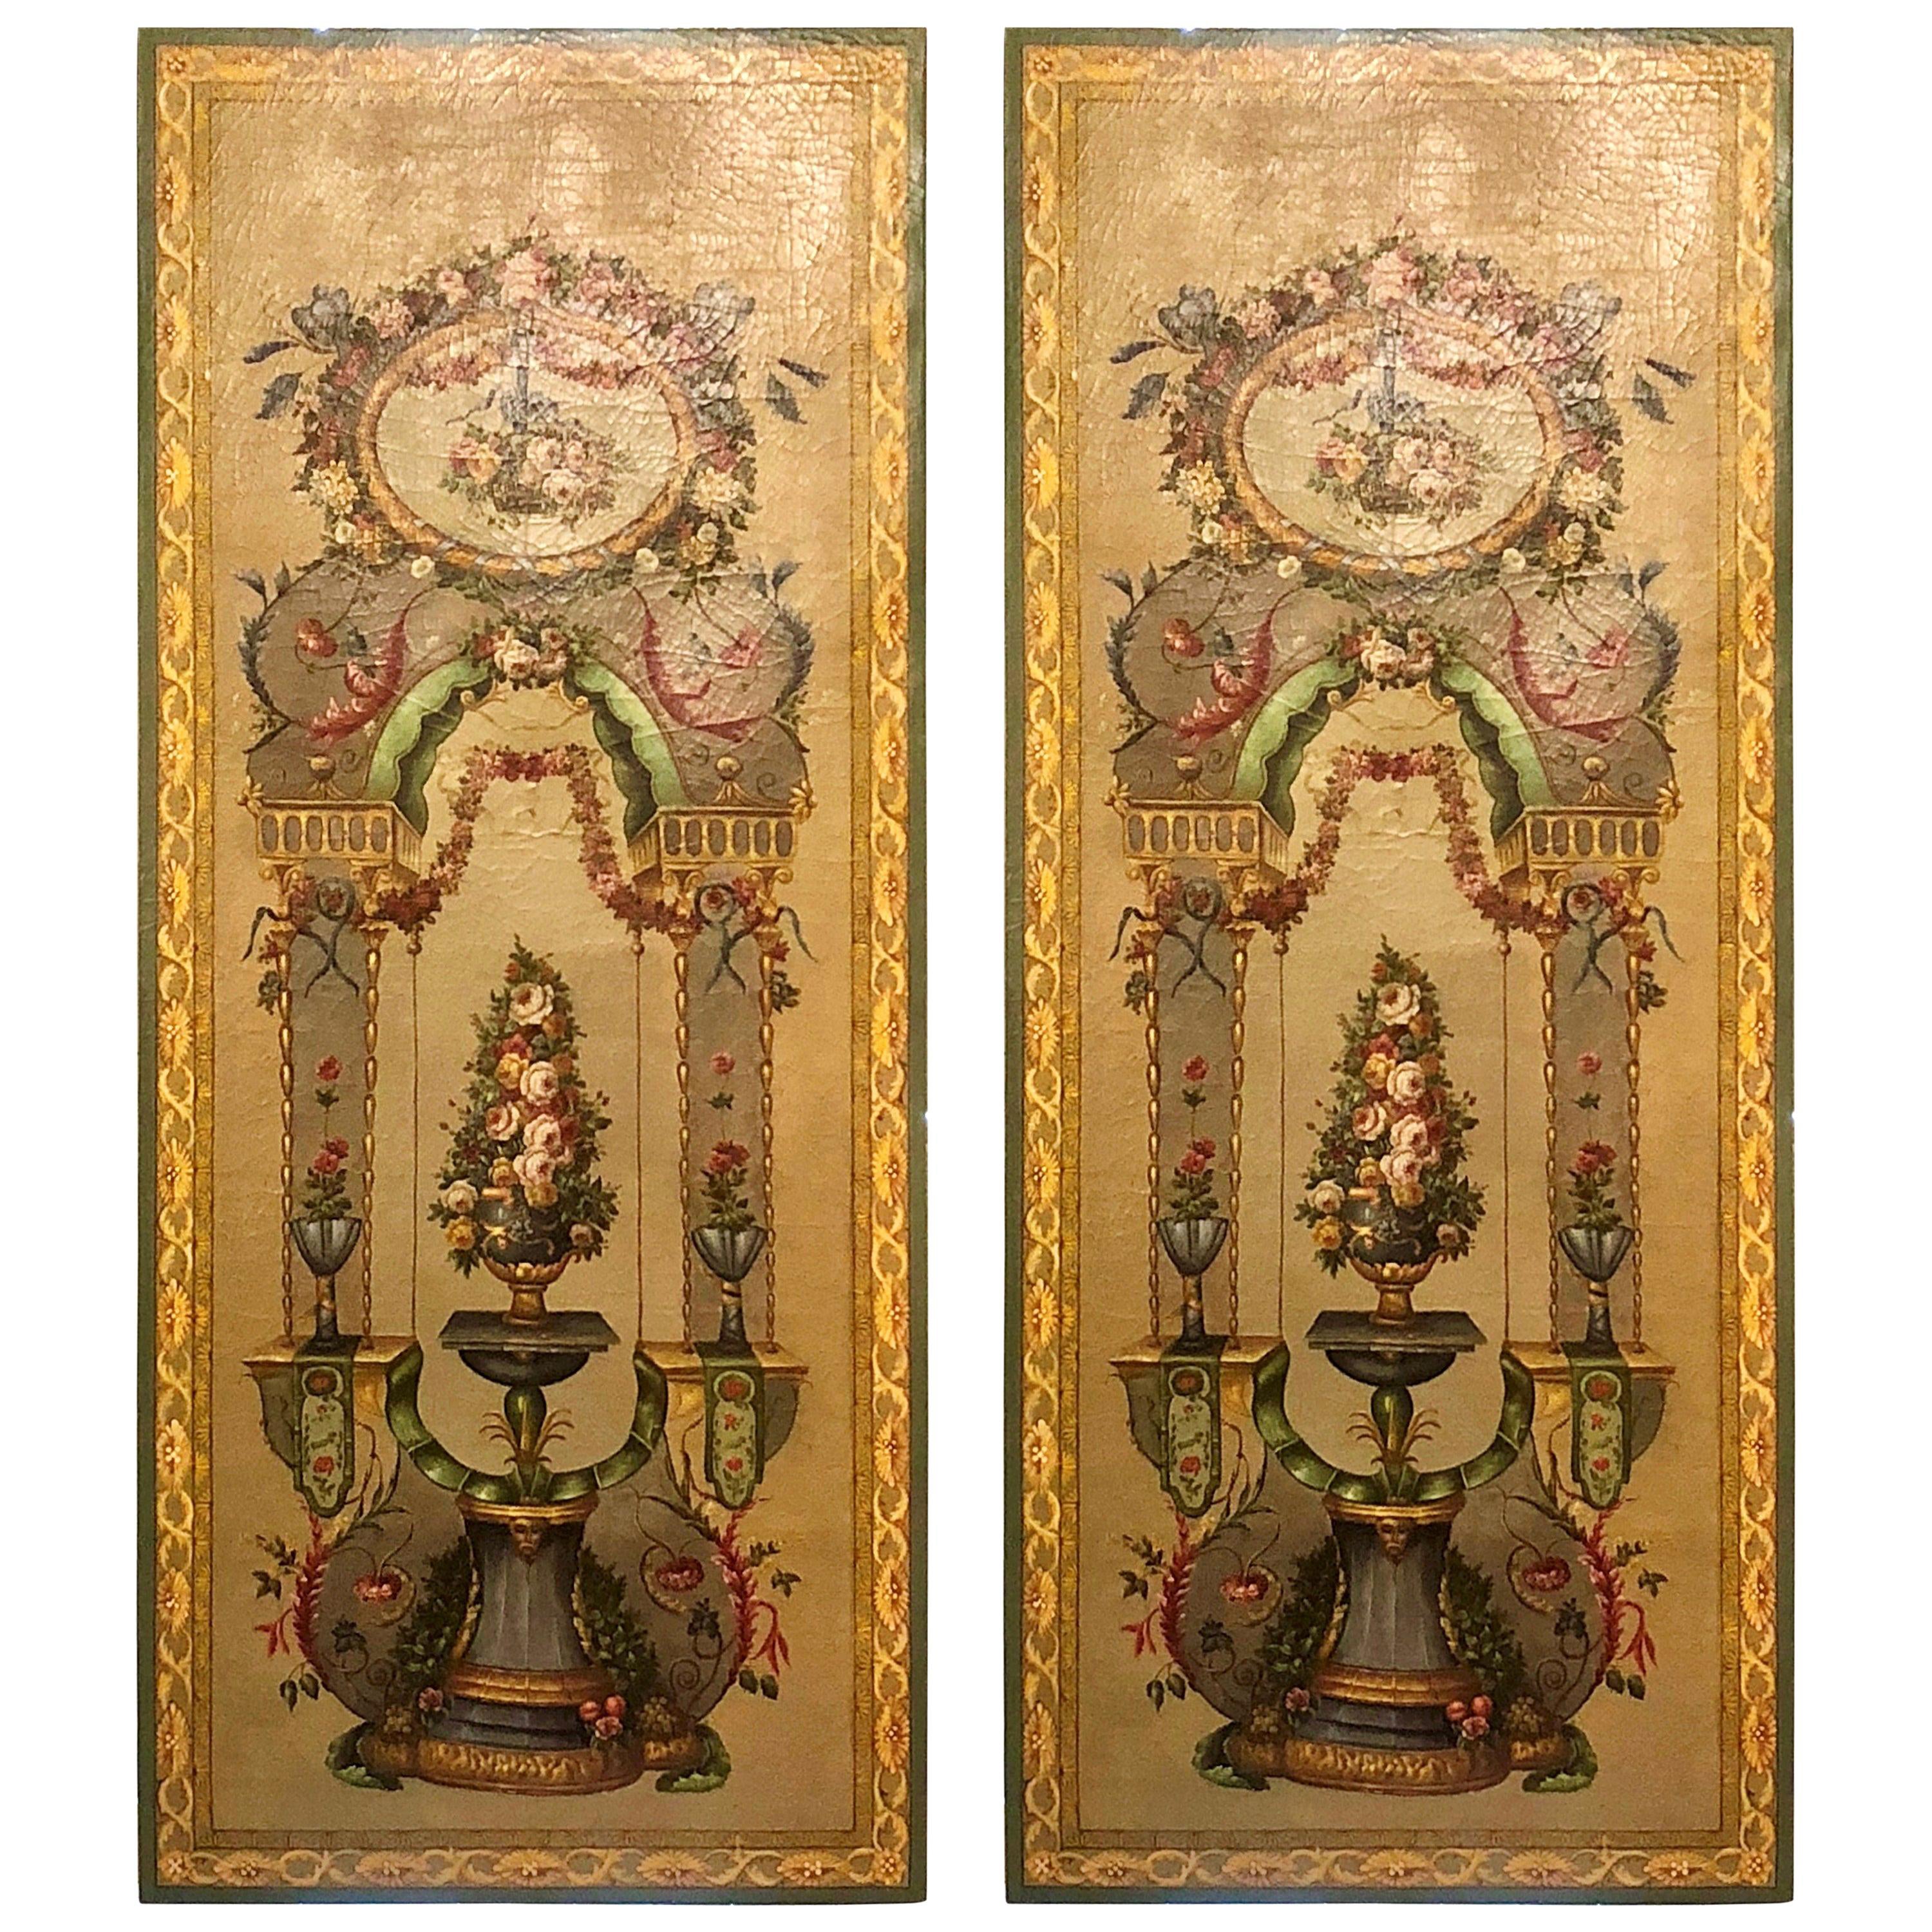 Pair of Antique 19th Century Tromp L'oeil Painted Panels